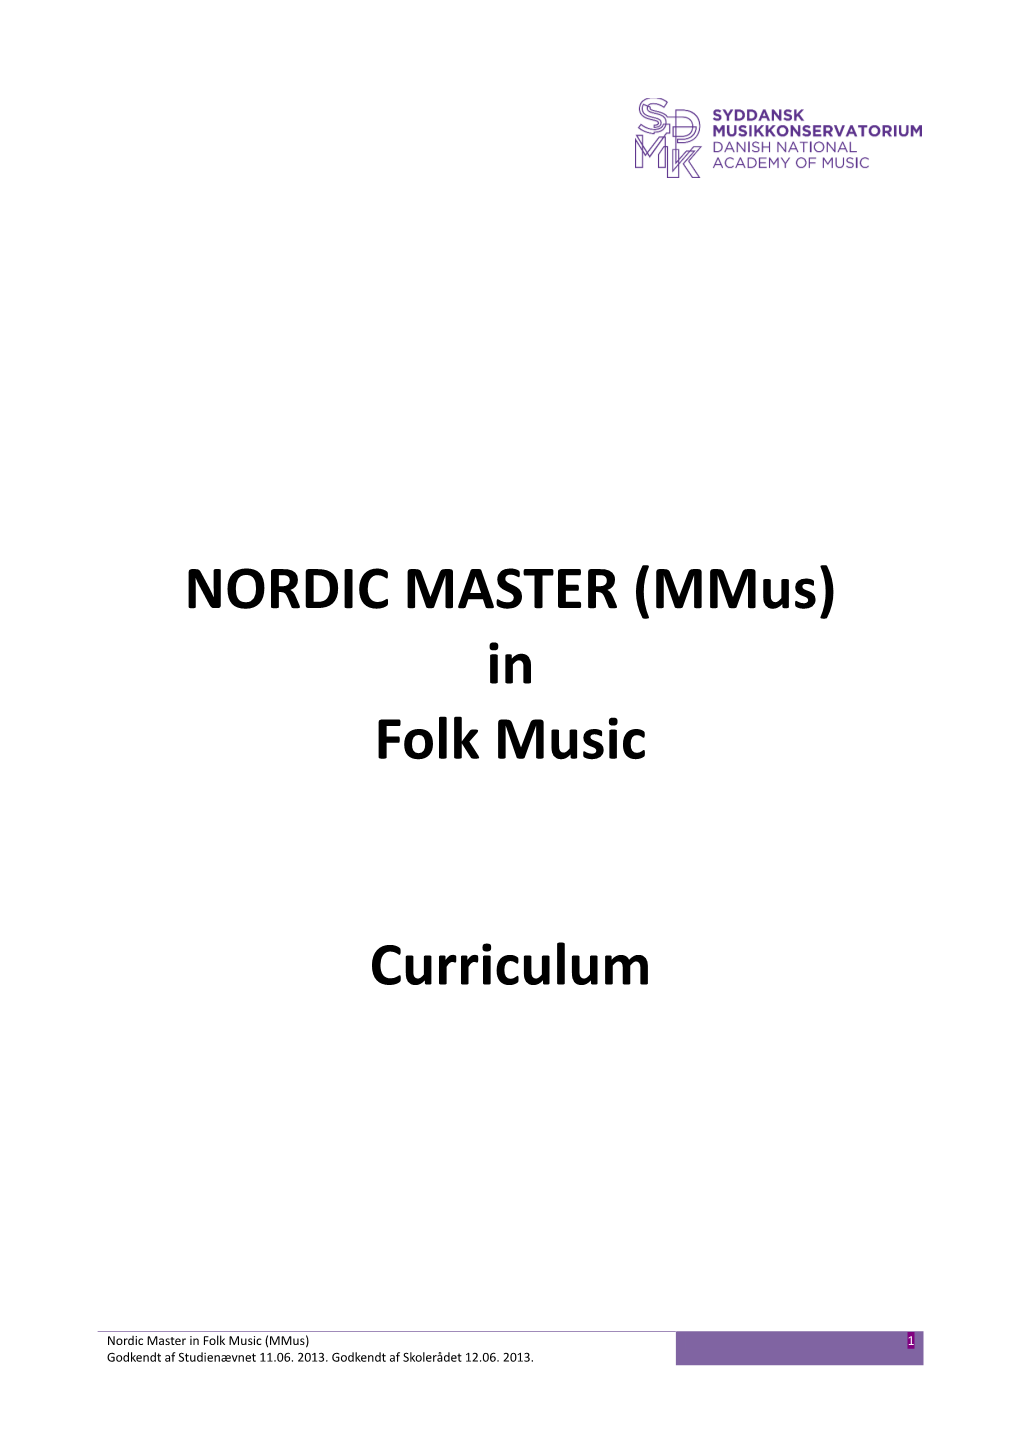 NORDIC MASTER (Mmus) in Folk Music